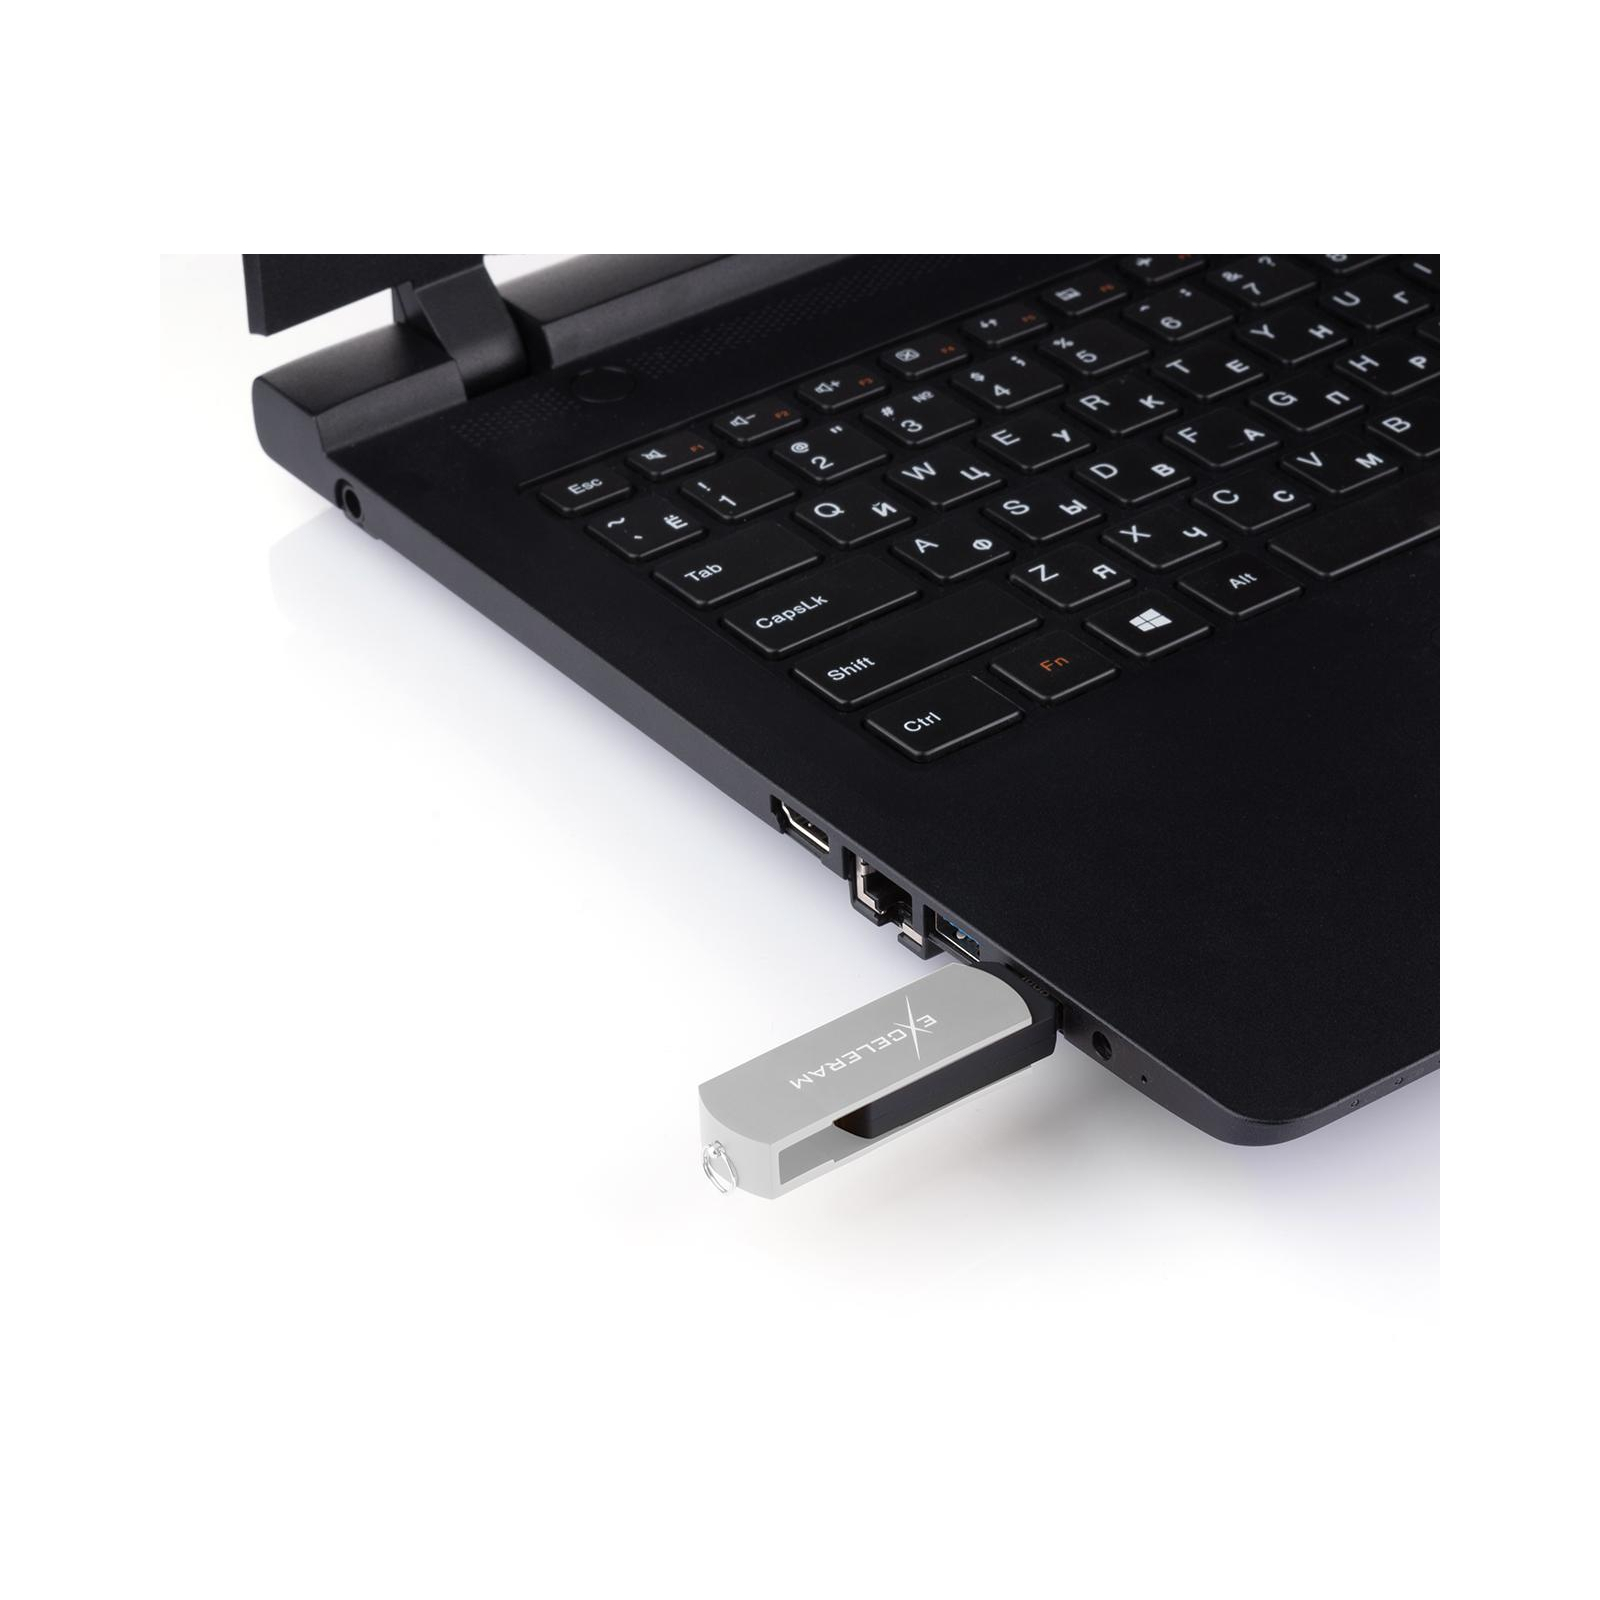 USB флеш накопитель eXceleram 16GB P2 Series Silver/Black USB 2.0 (EXP2U2SIB16) изображение 7